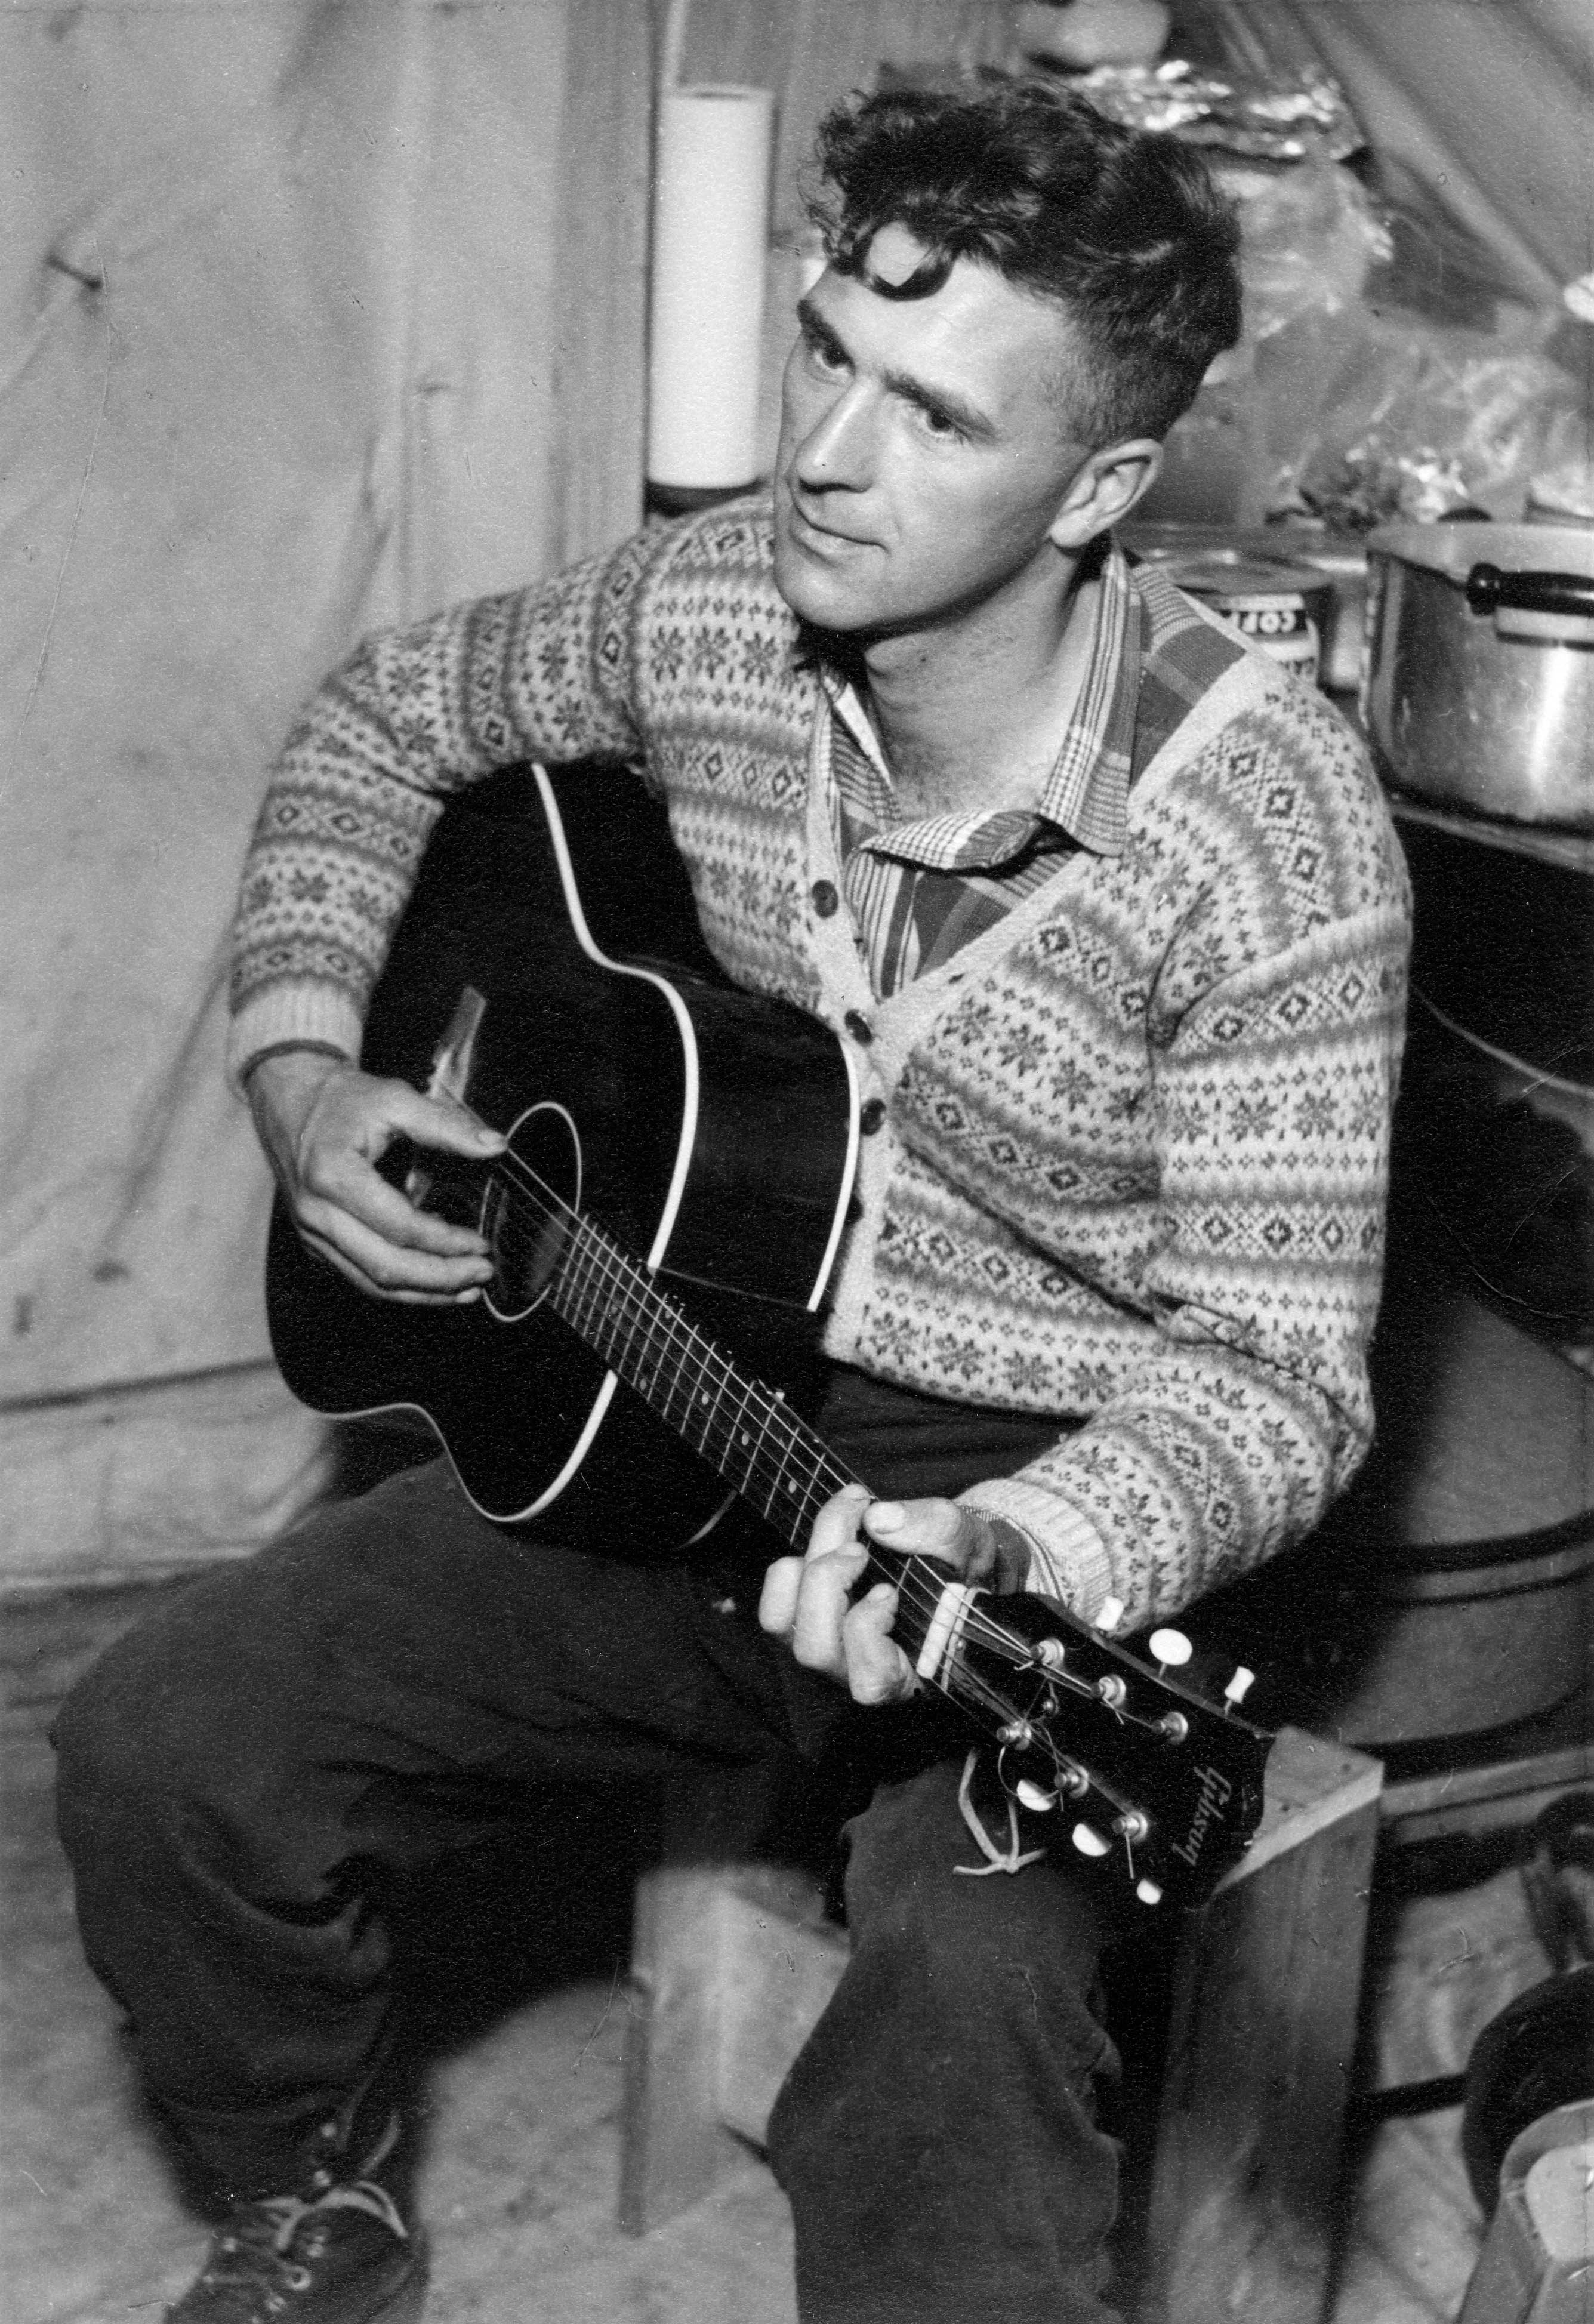 Keith Crowe strumming his guitar in 1960